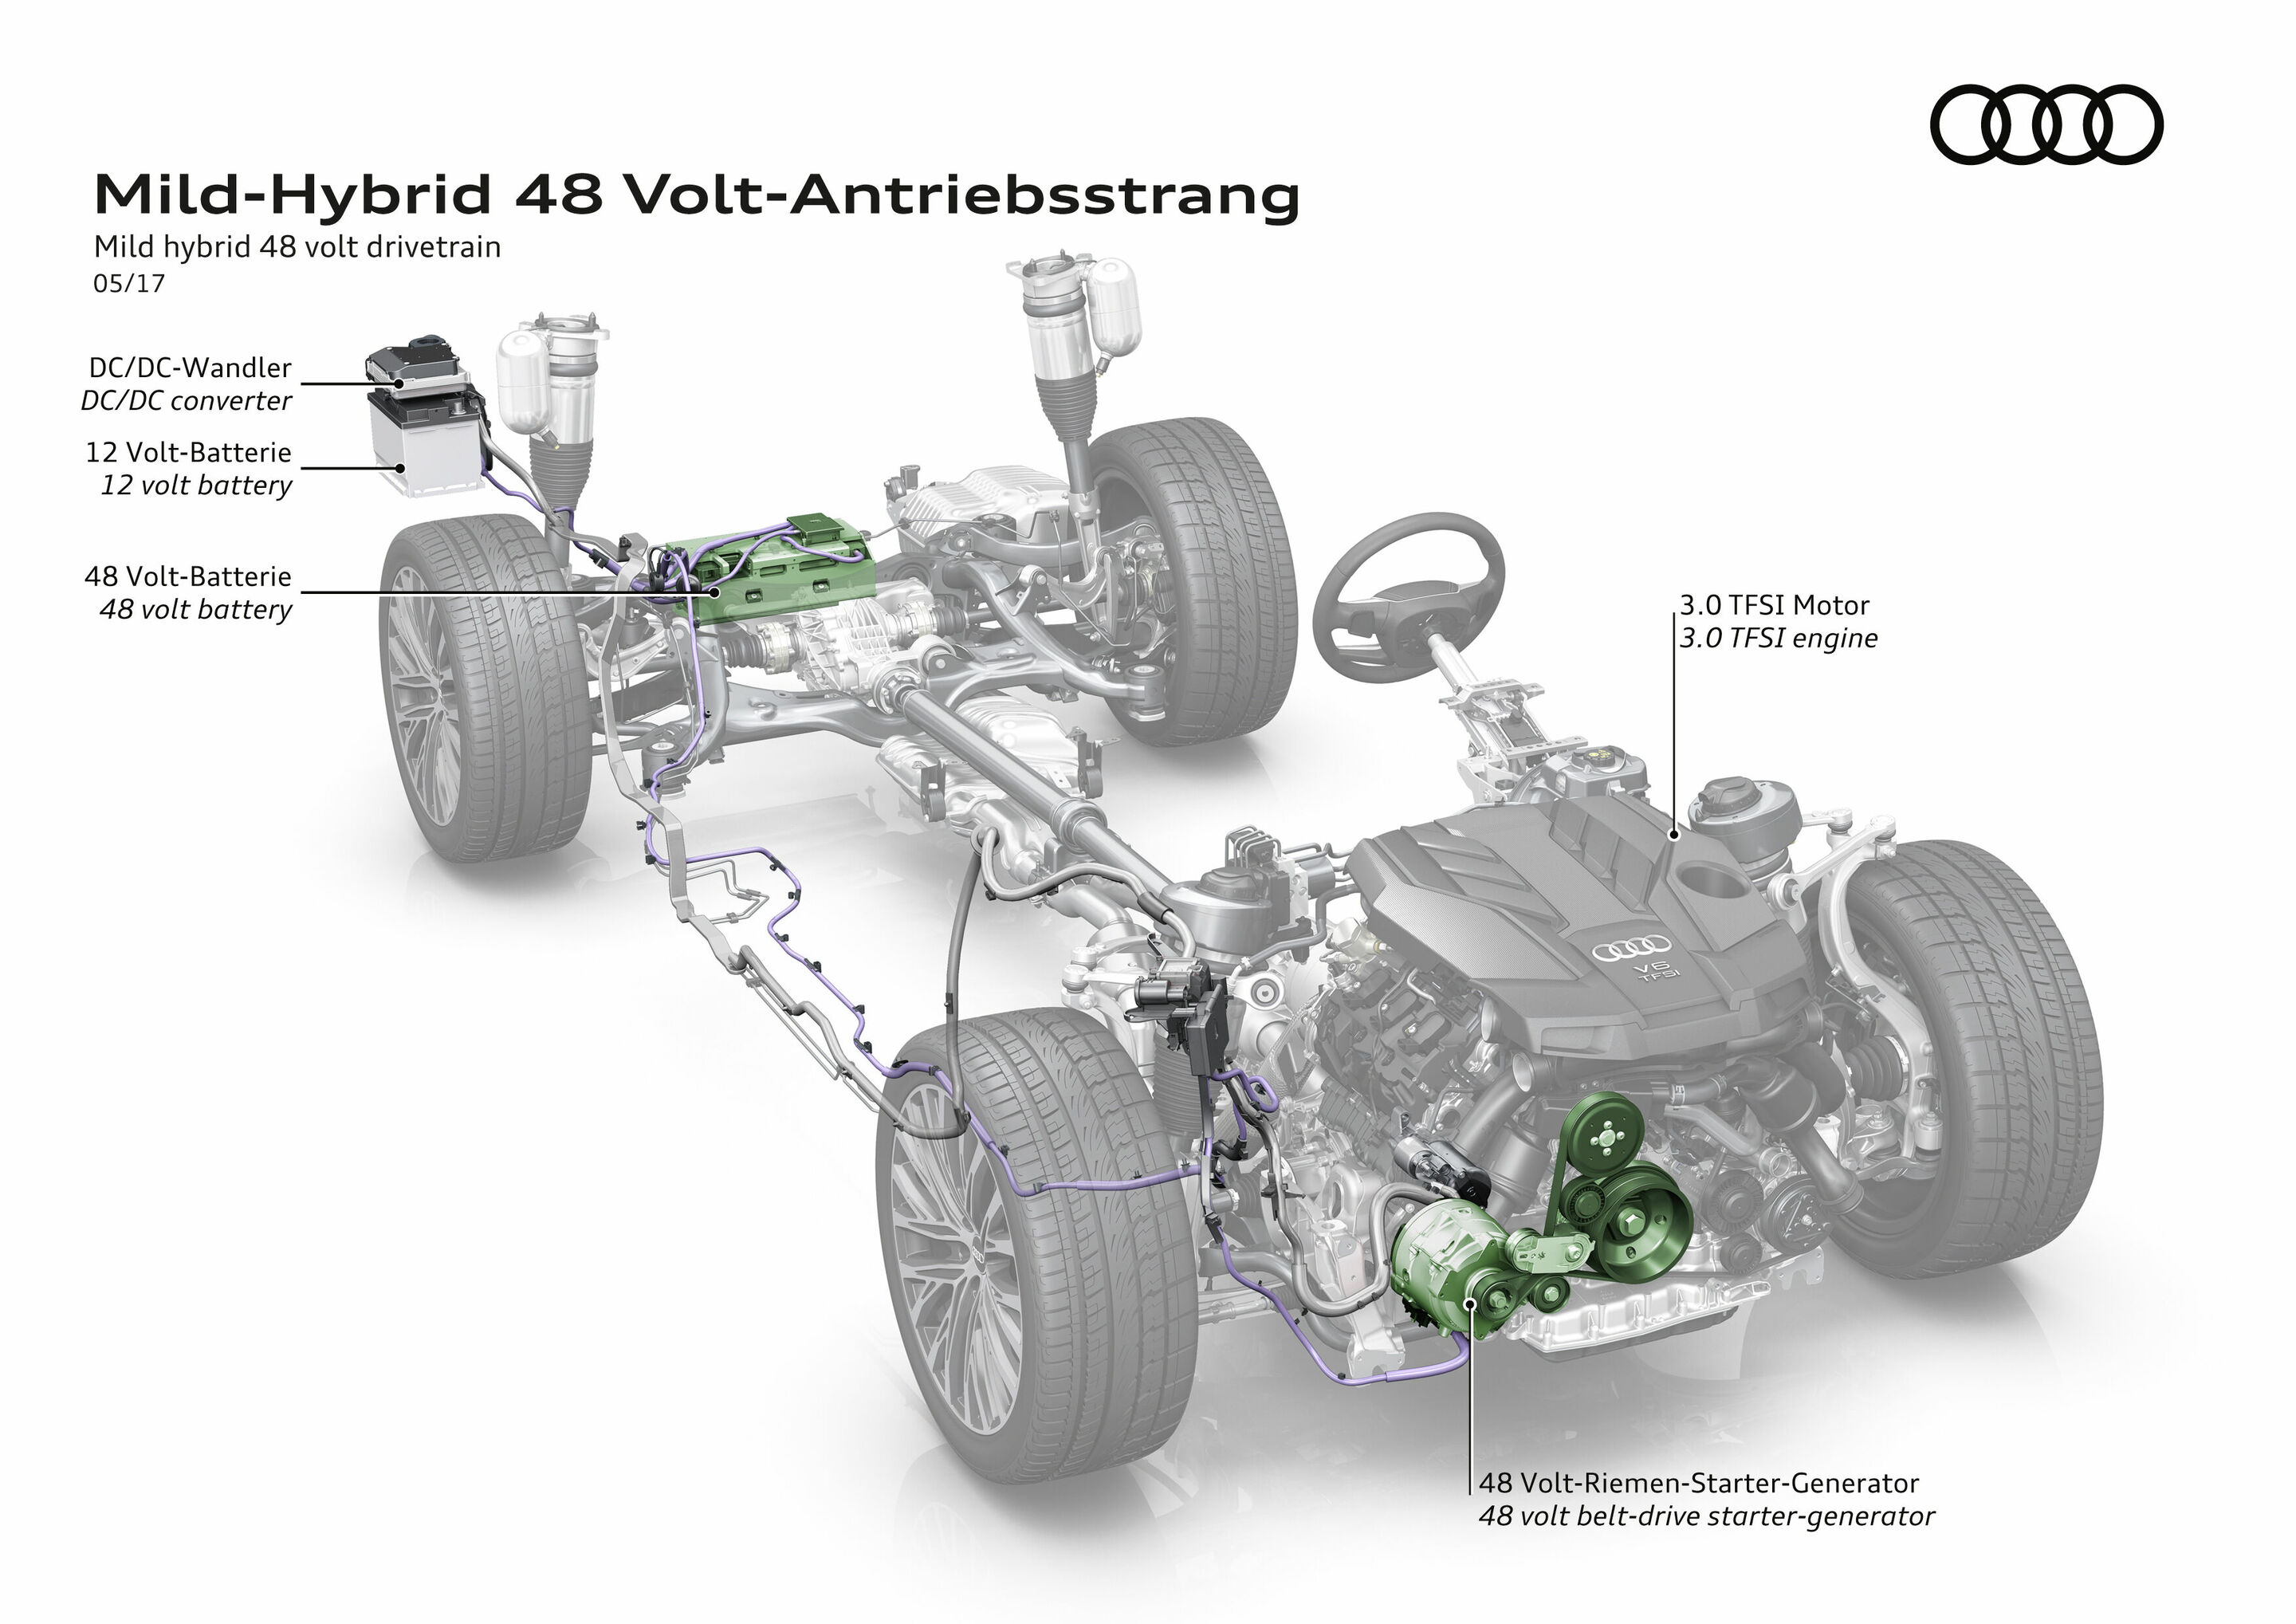 Mild-Hybrid 48 Volt-Antriebsstrang